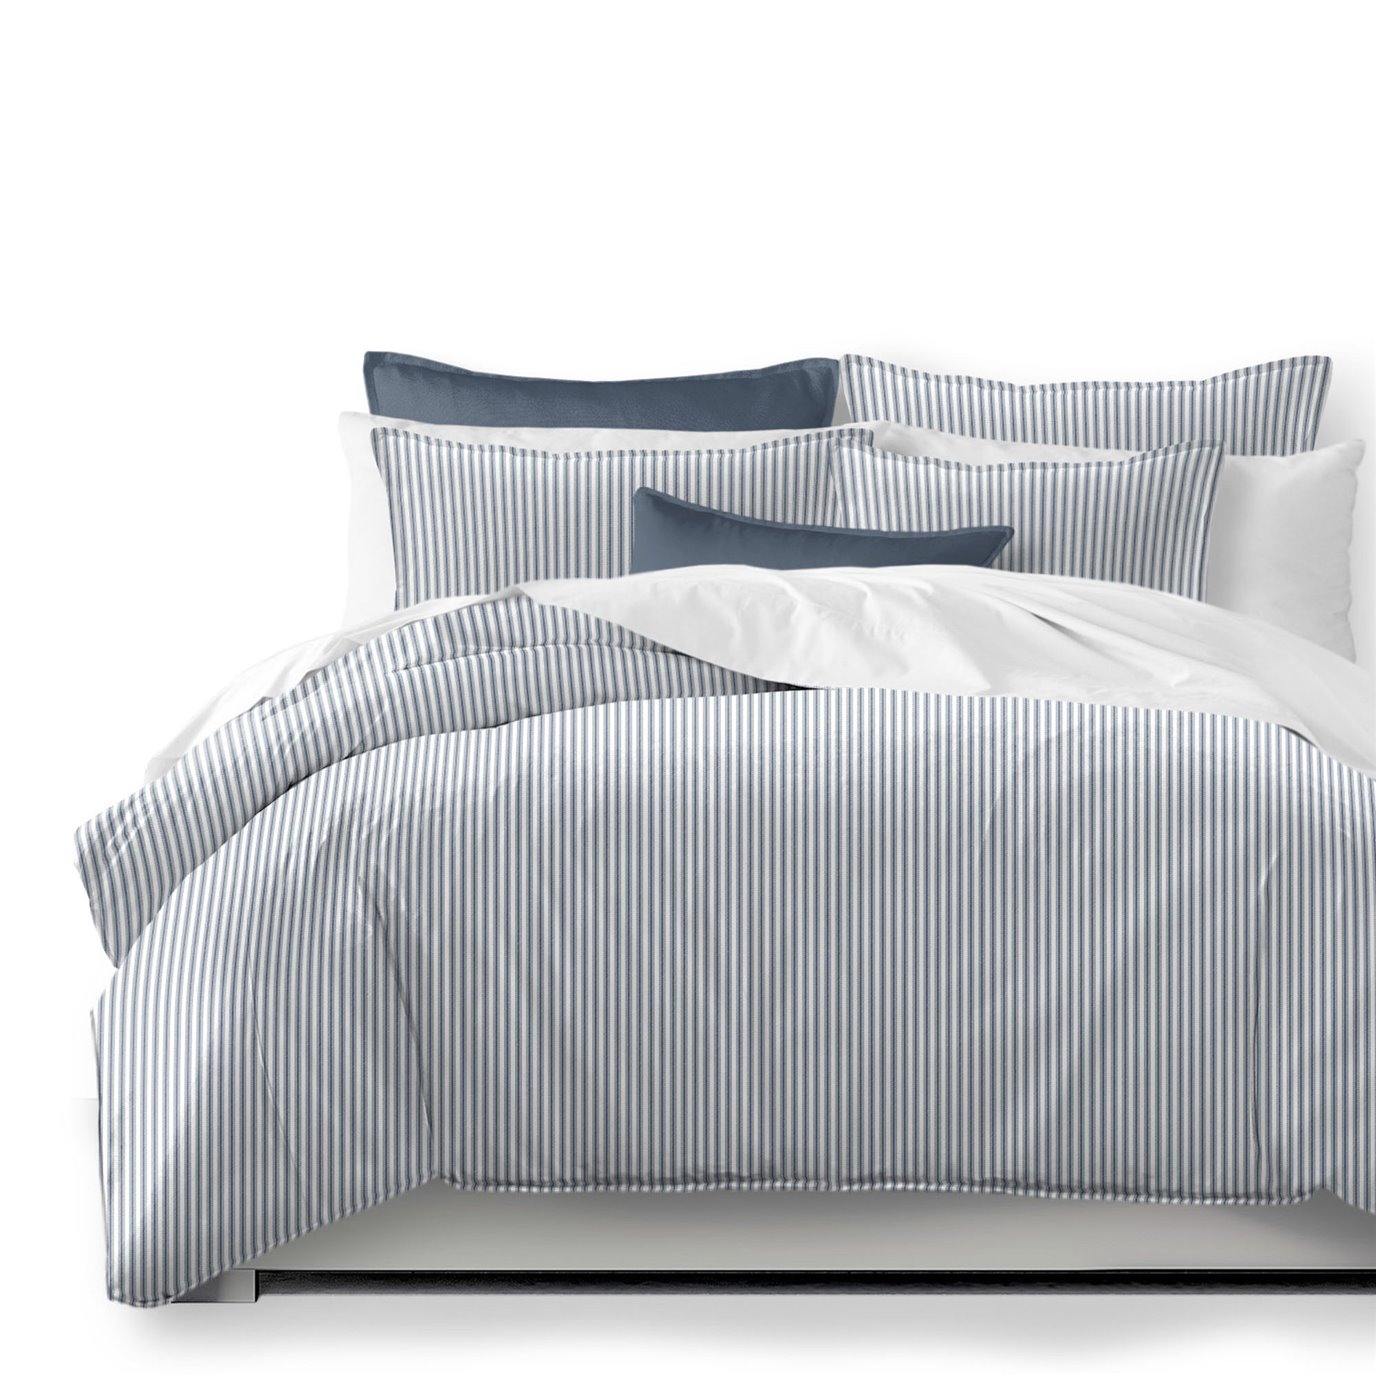 Cruz Ticking Stripes White/Navy Comforter and Pillow Sham(s) Set - Size Super King